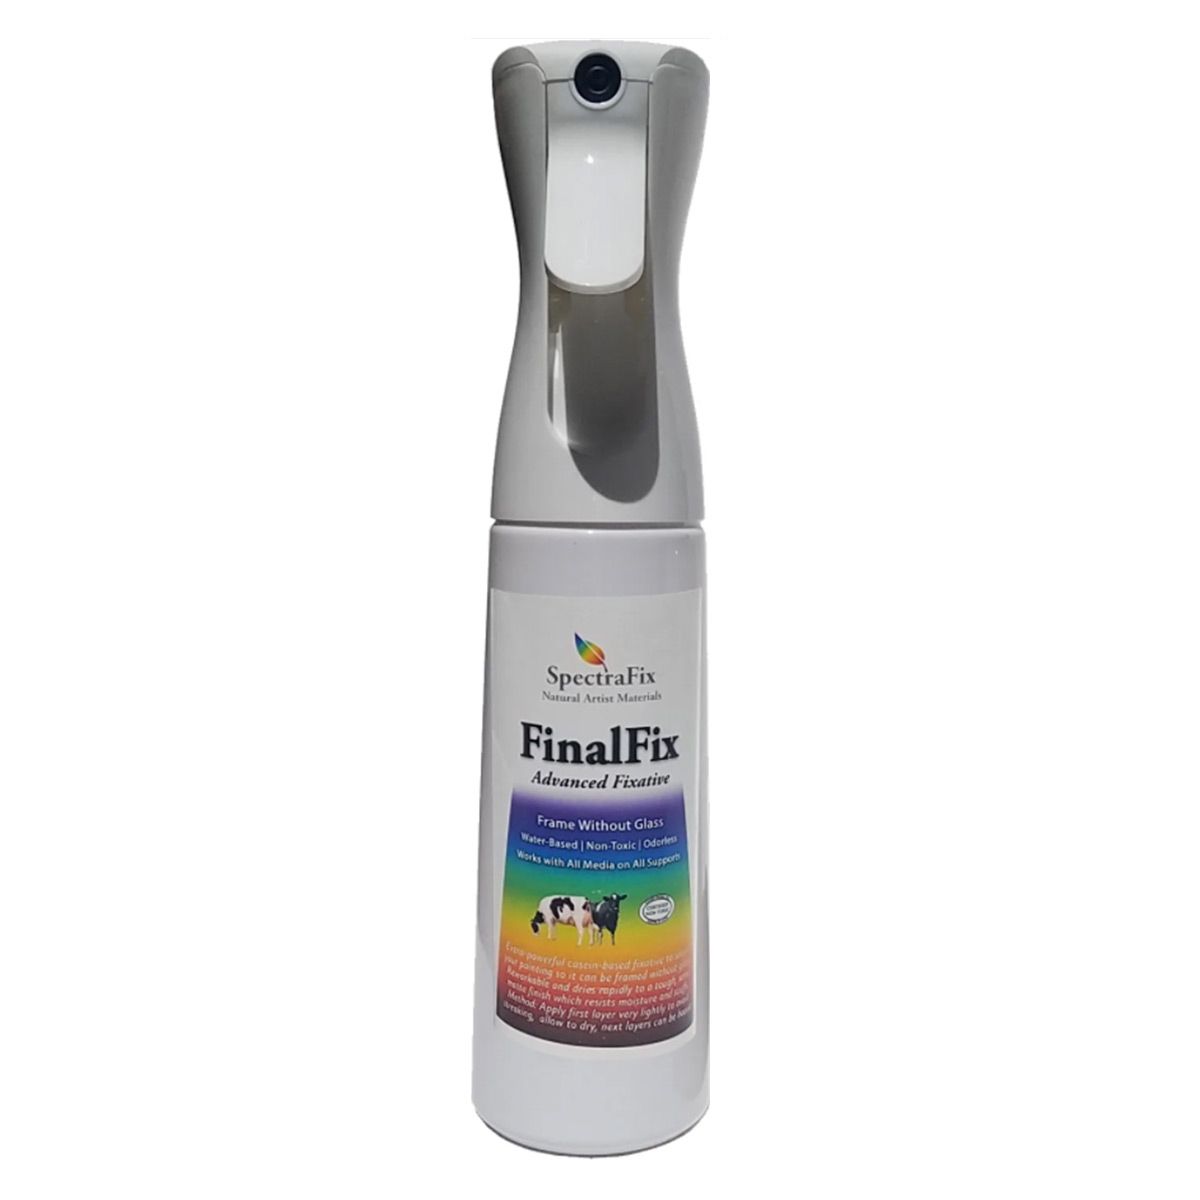 Spectrafix Degas Pastel Fixative Spray Bottle 10 oz Aerosol Spray